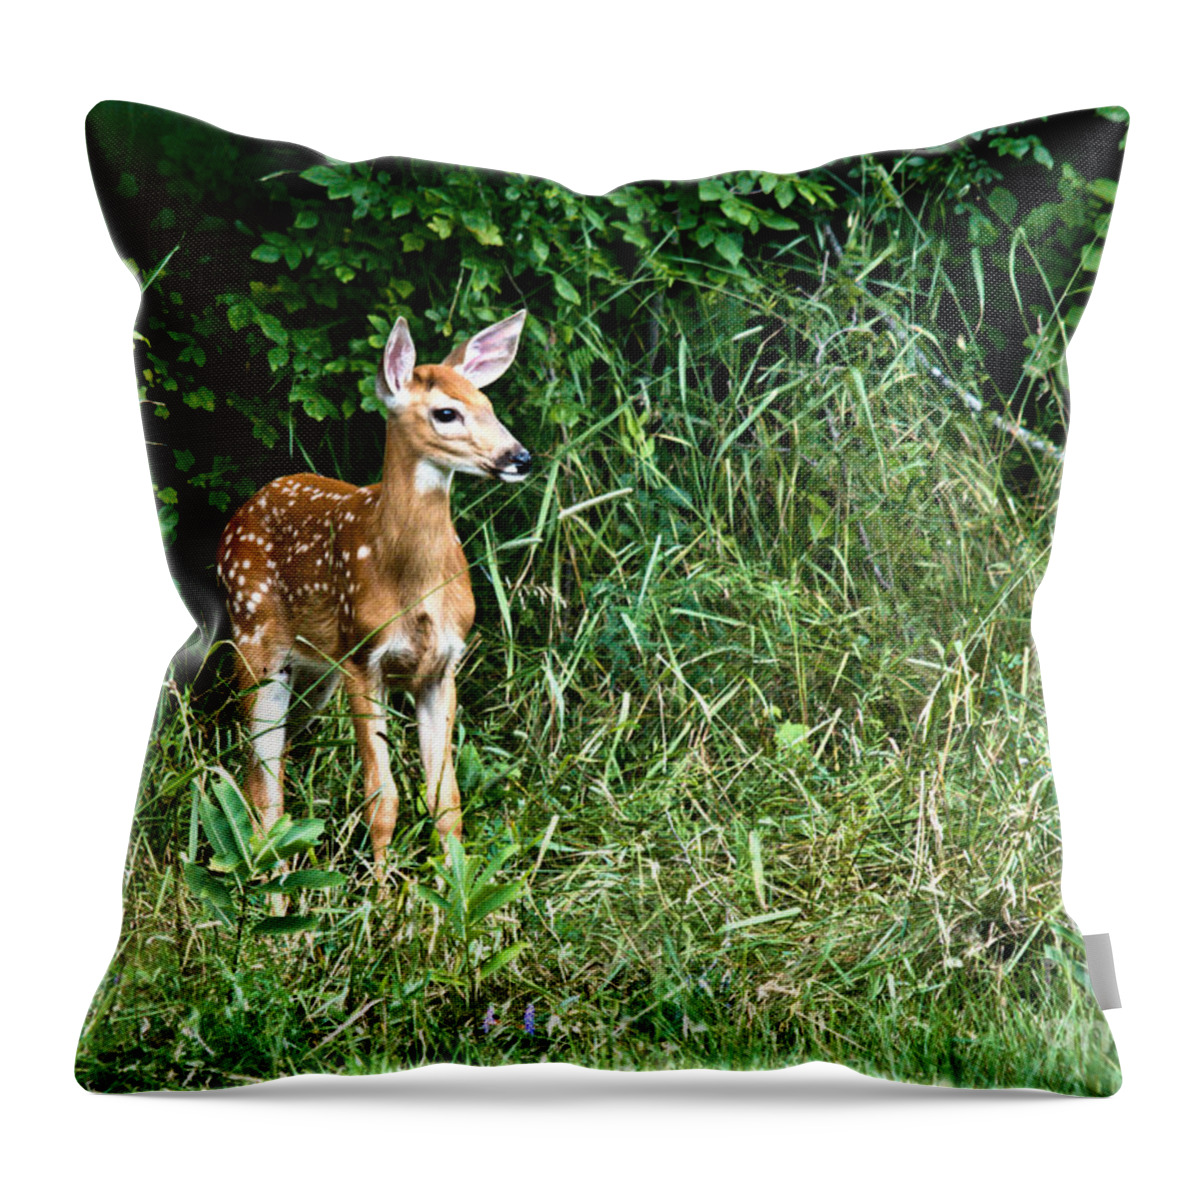 Deer Throw Pillow featuring the photograph Fawn by Cheryl Baxter